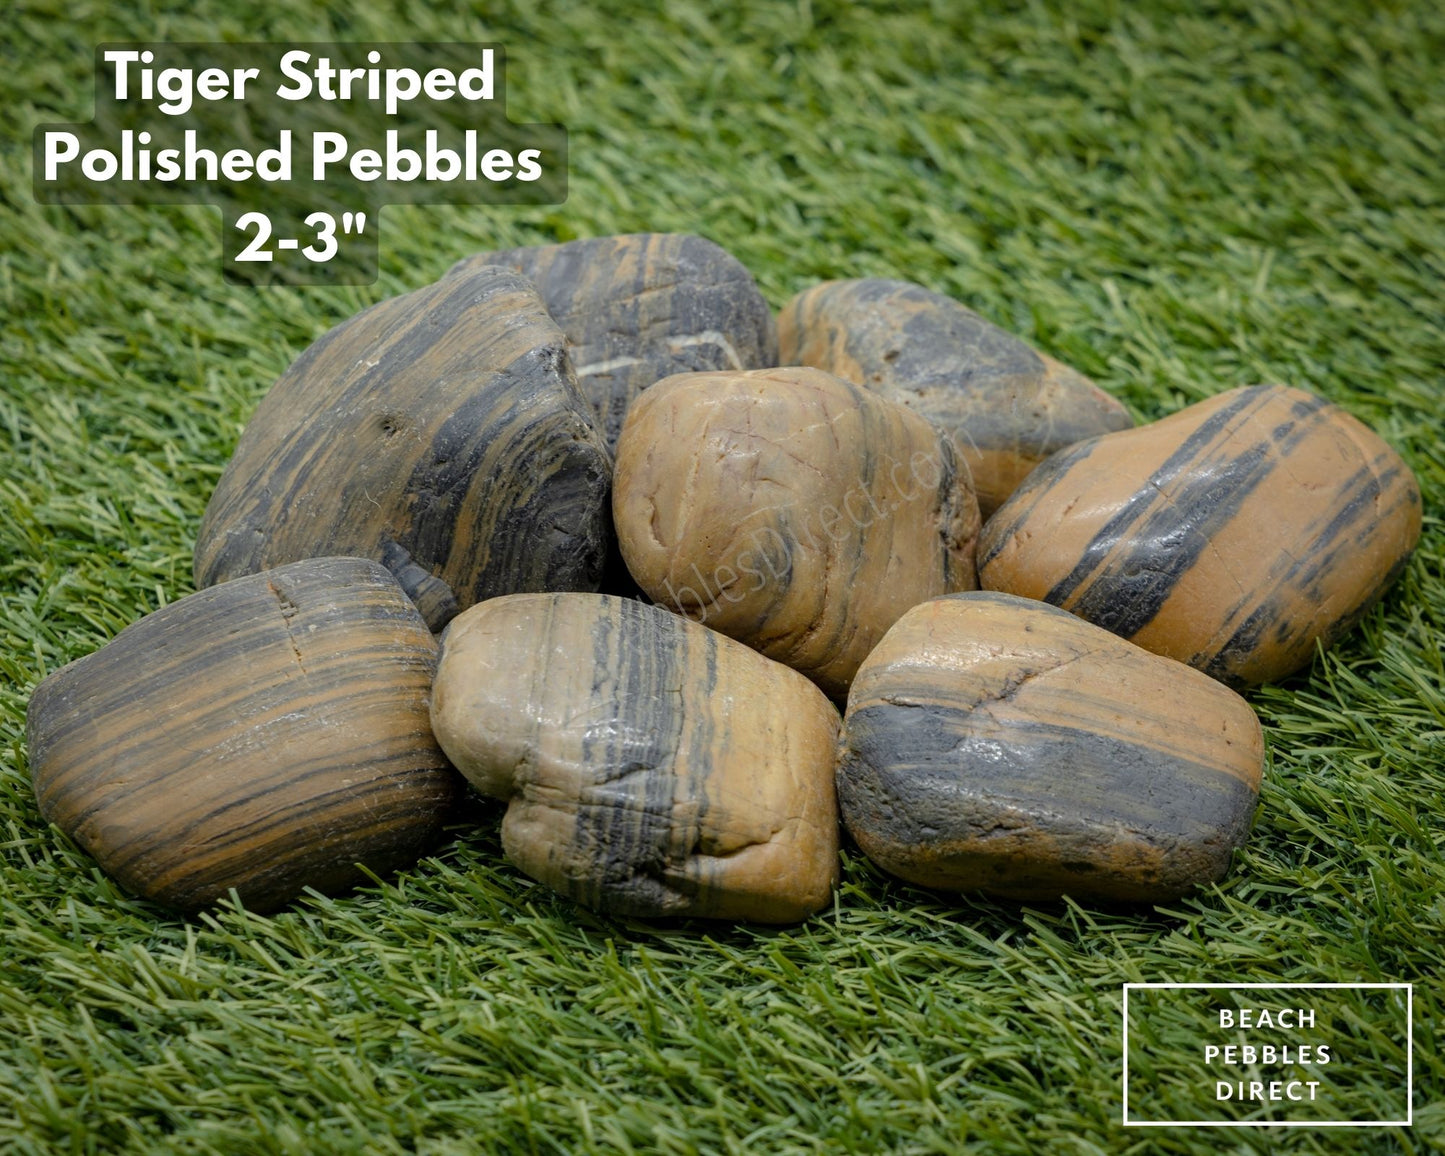 Tiger Striped Polished Pebbles